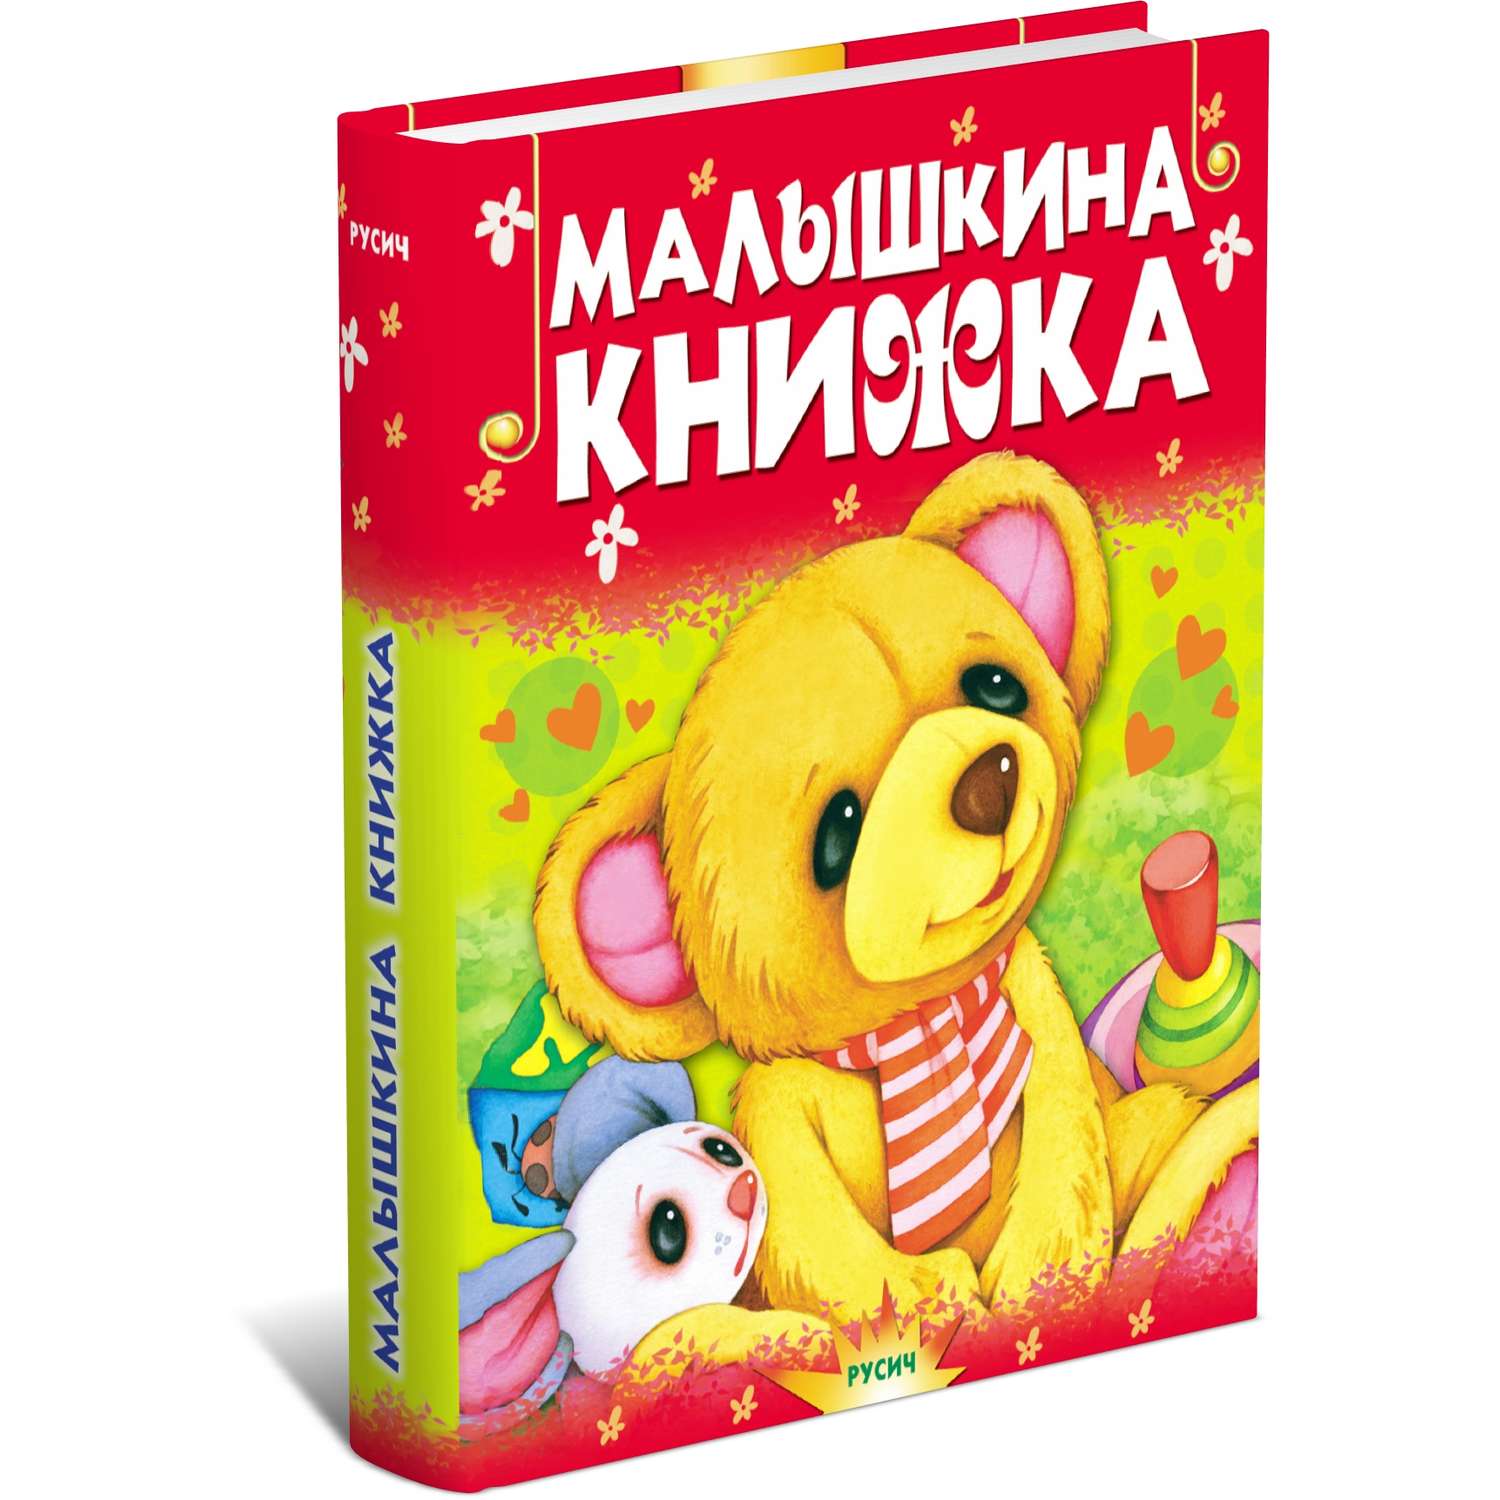 Книга Русич Стихи загадки сказки для детей - фото 1